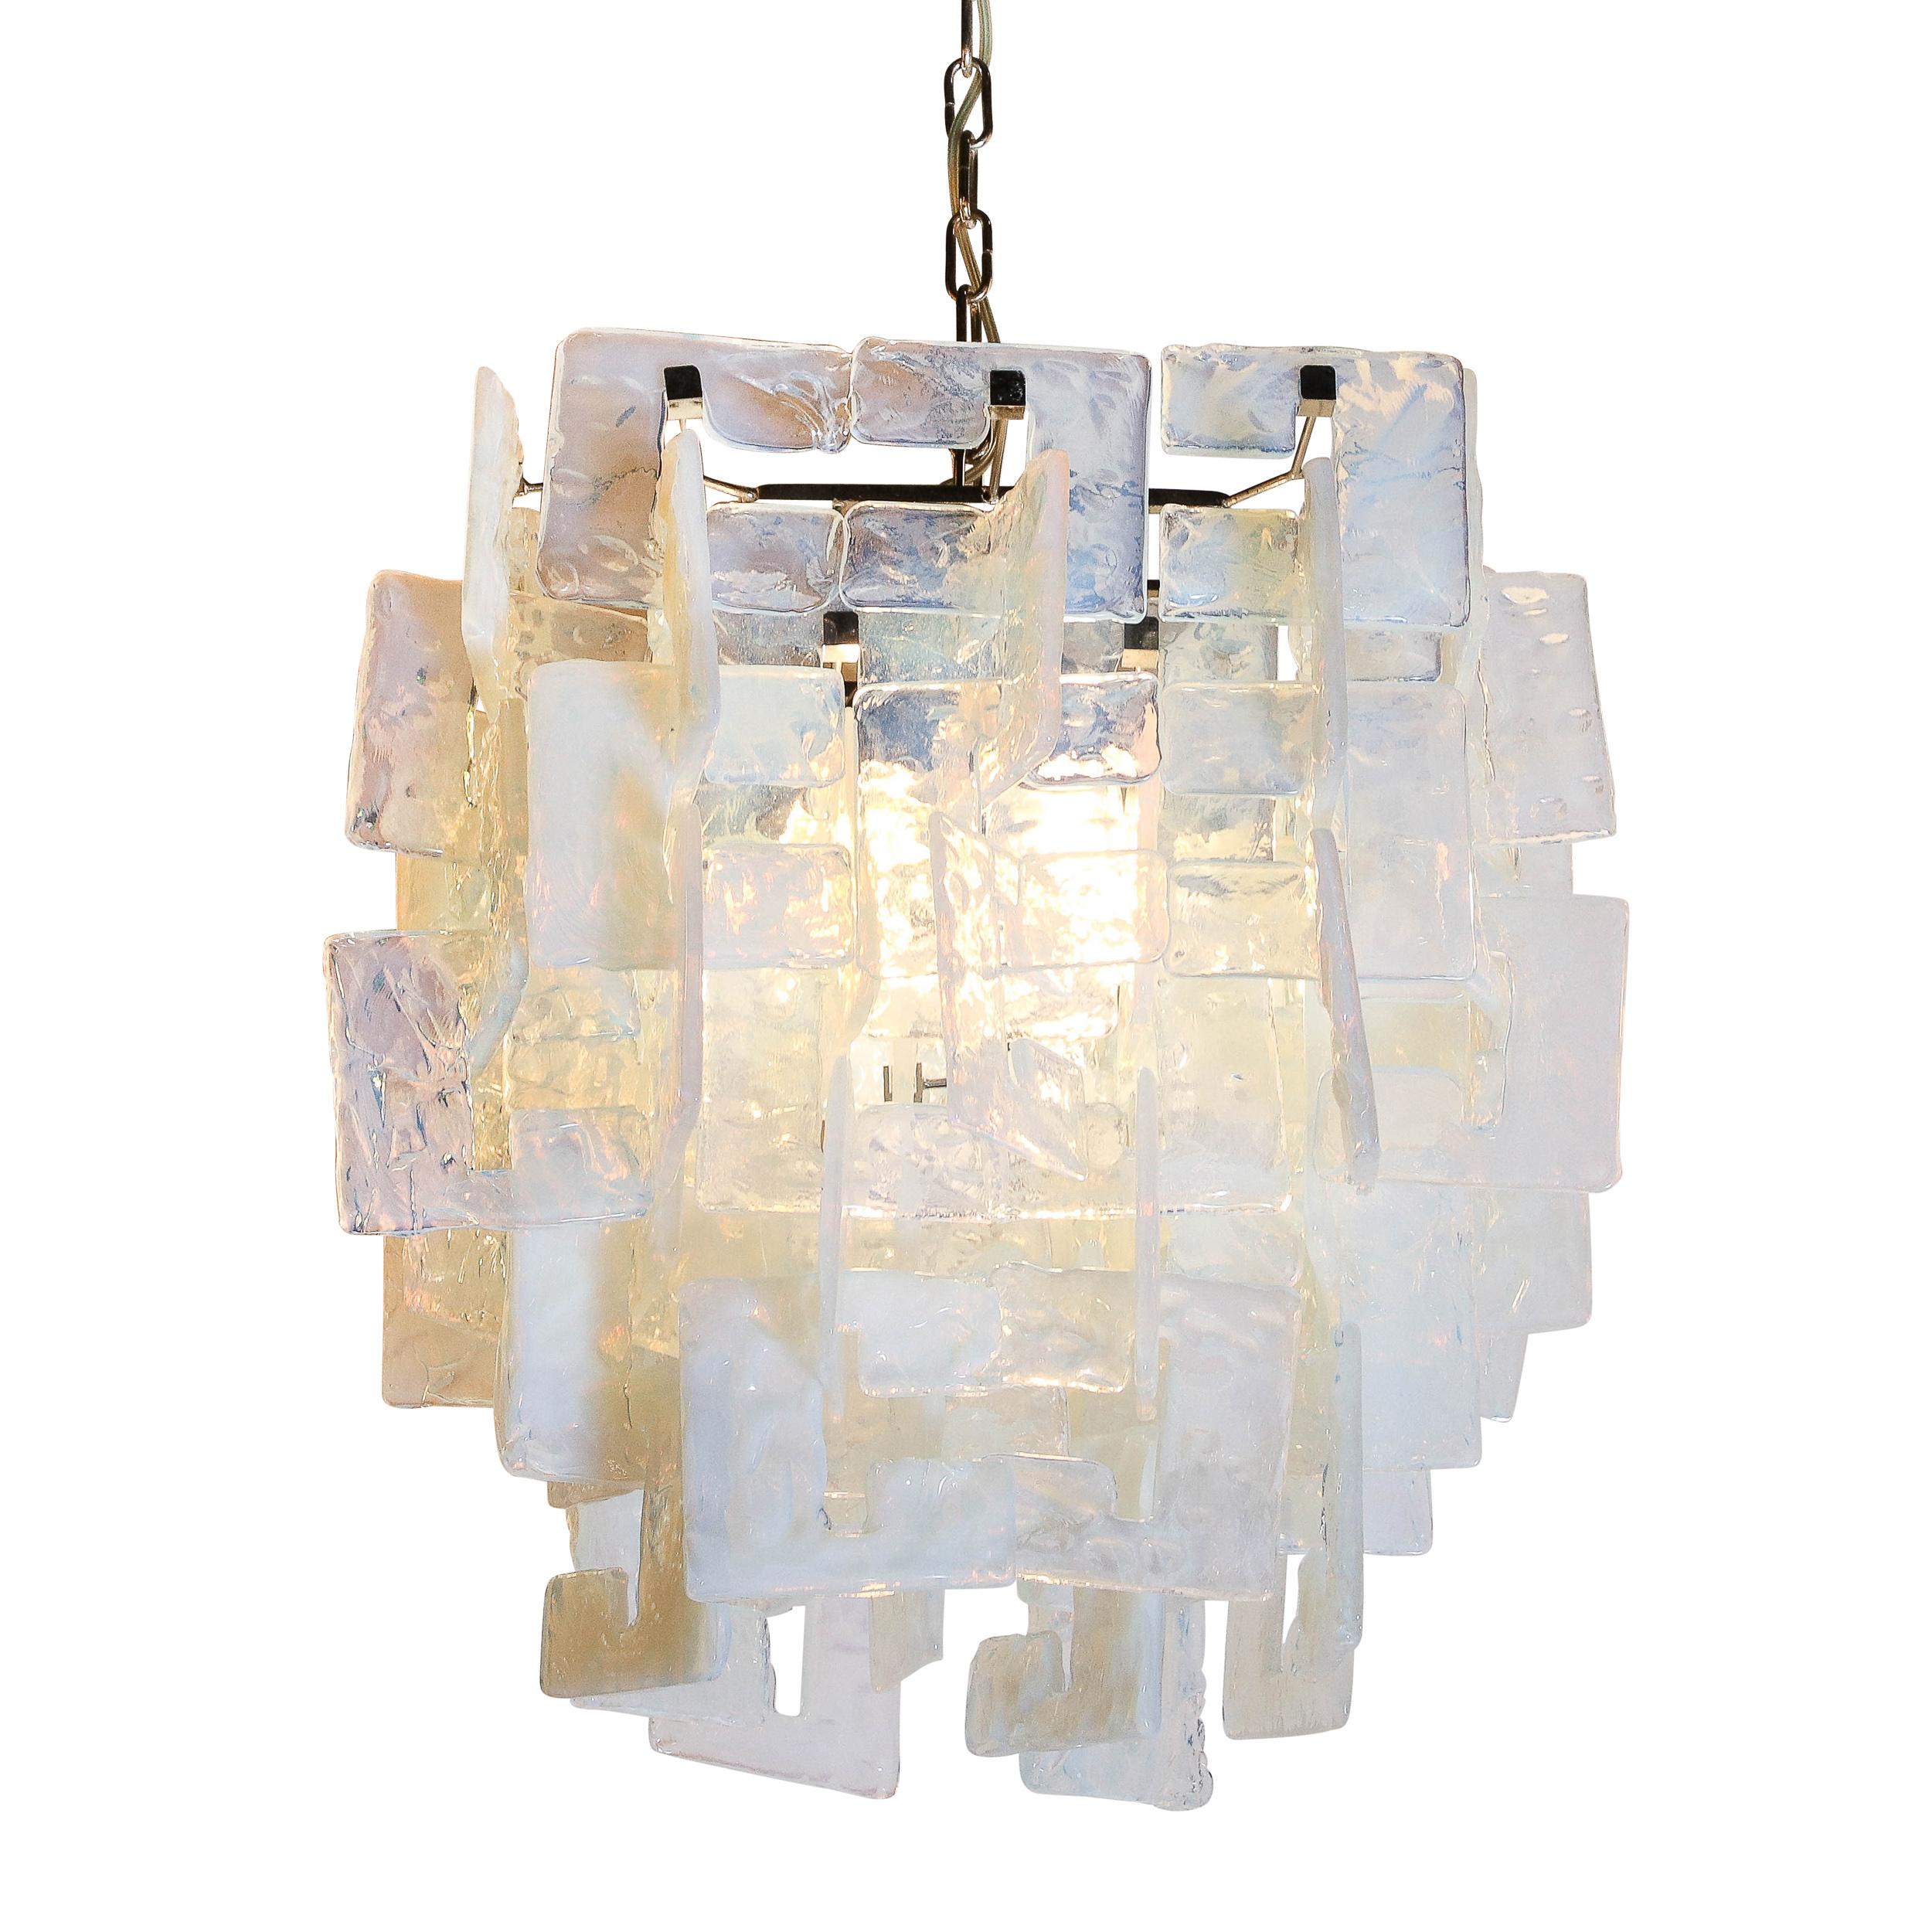 Italian Modernist Hand-Blown Murano Mottled & Opalescent Interlocking Glass Chandelier For Sale